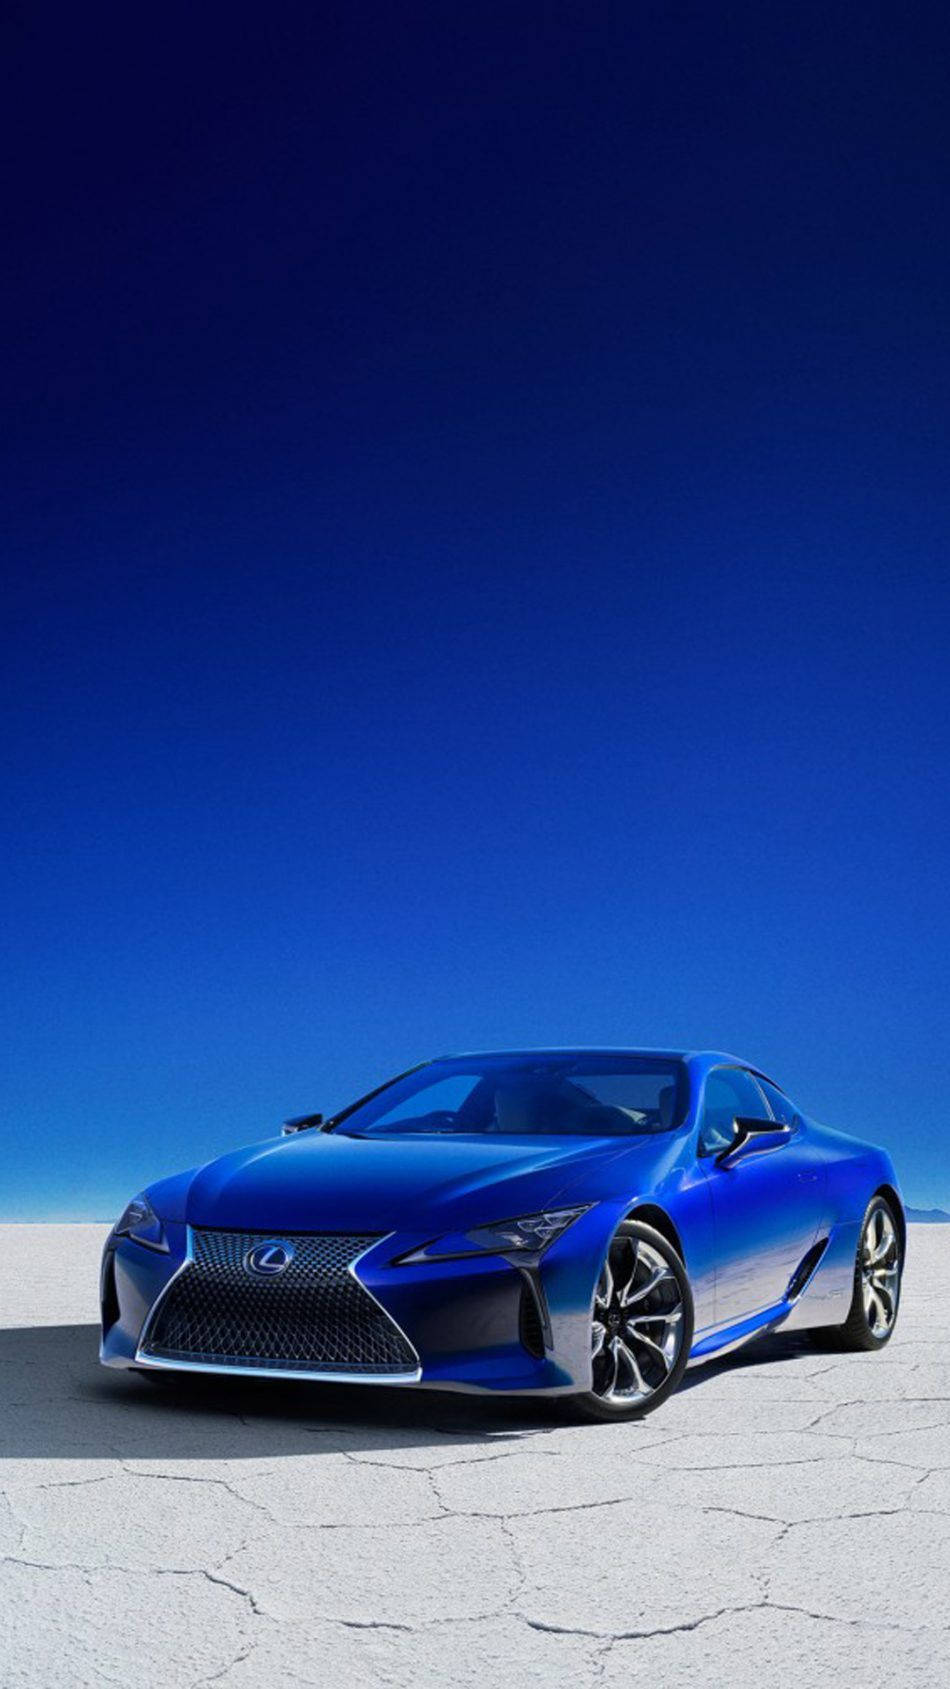 Striking Lexus LC 500h in Structural Blue Wallpaper